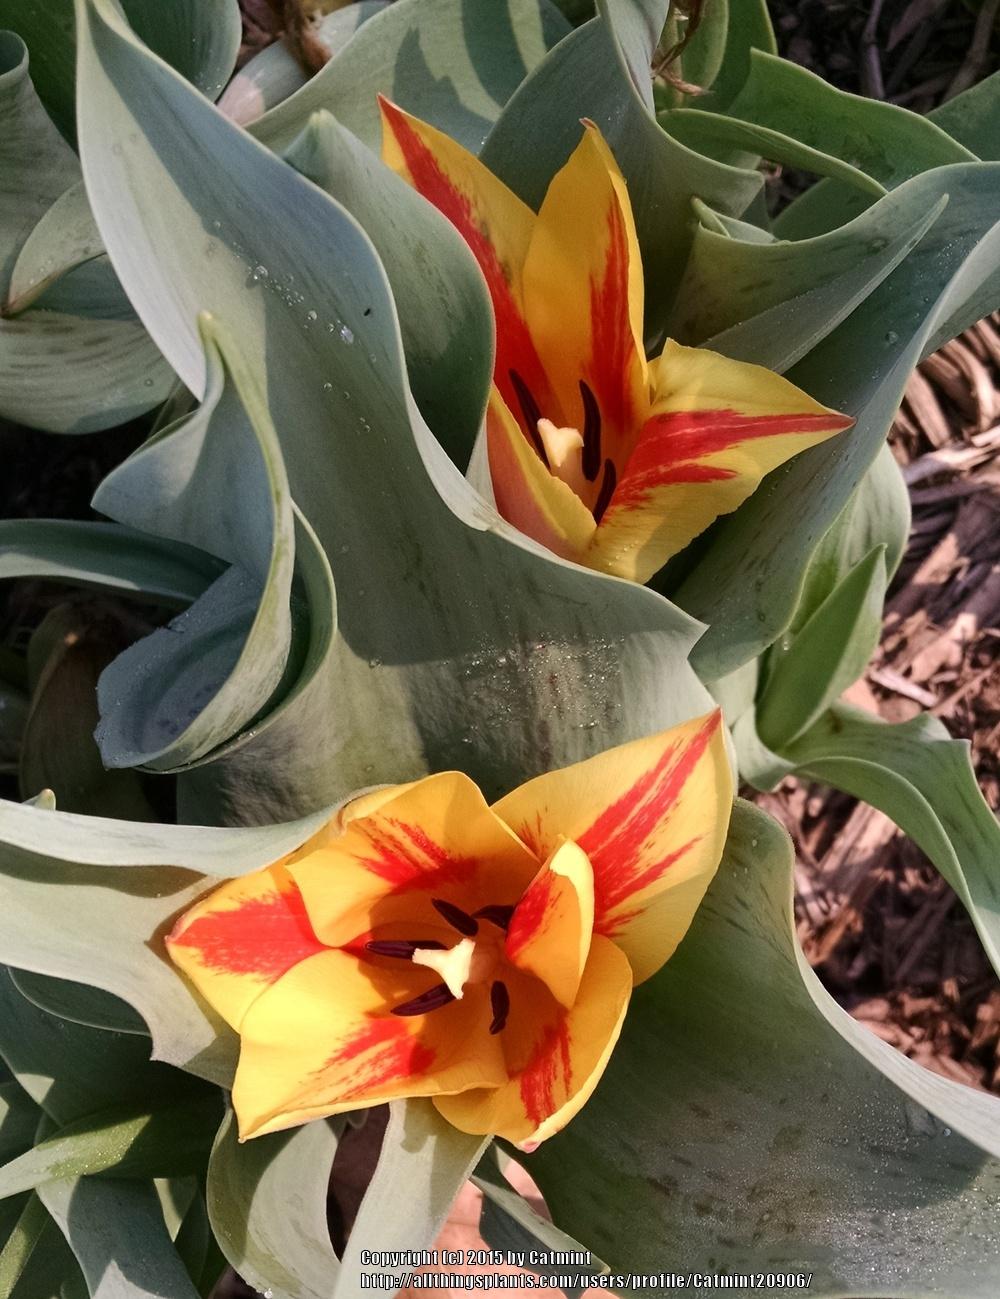 Photo of Greigii Tulip (Tulipa 'Winnipeg') uploaded by Catmint20906